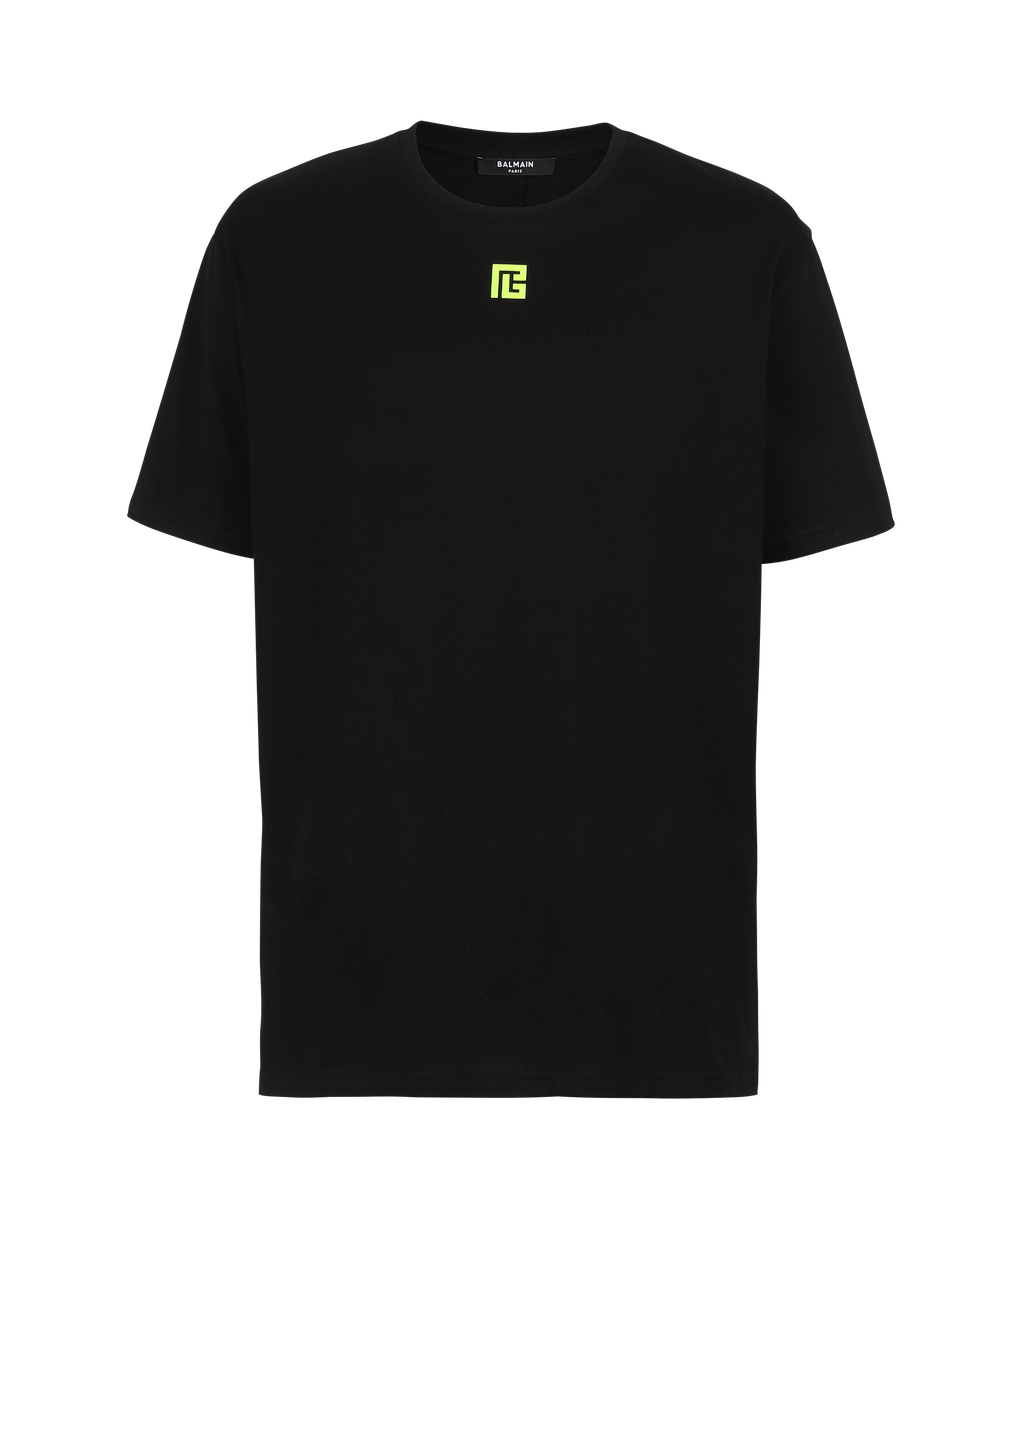 EXCLUSIF - T-shirt en coton imprimé maxi logo Balmain dans le dos, noir, hi-res